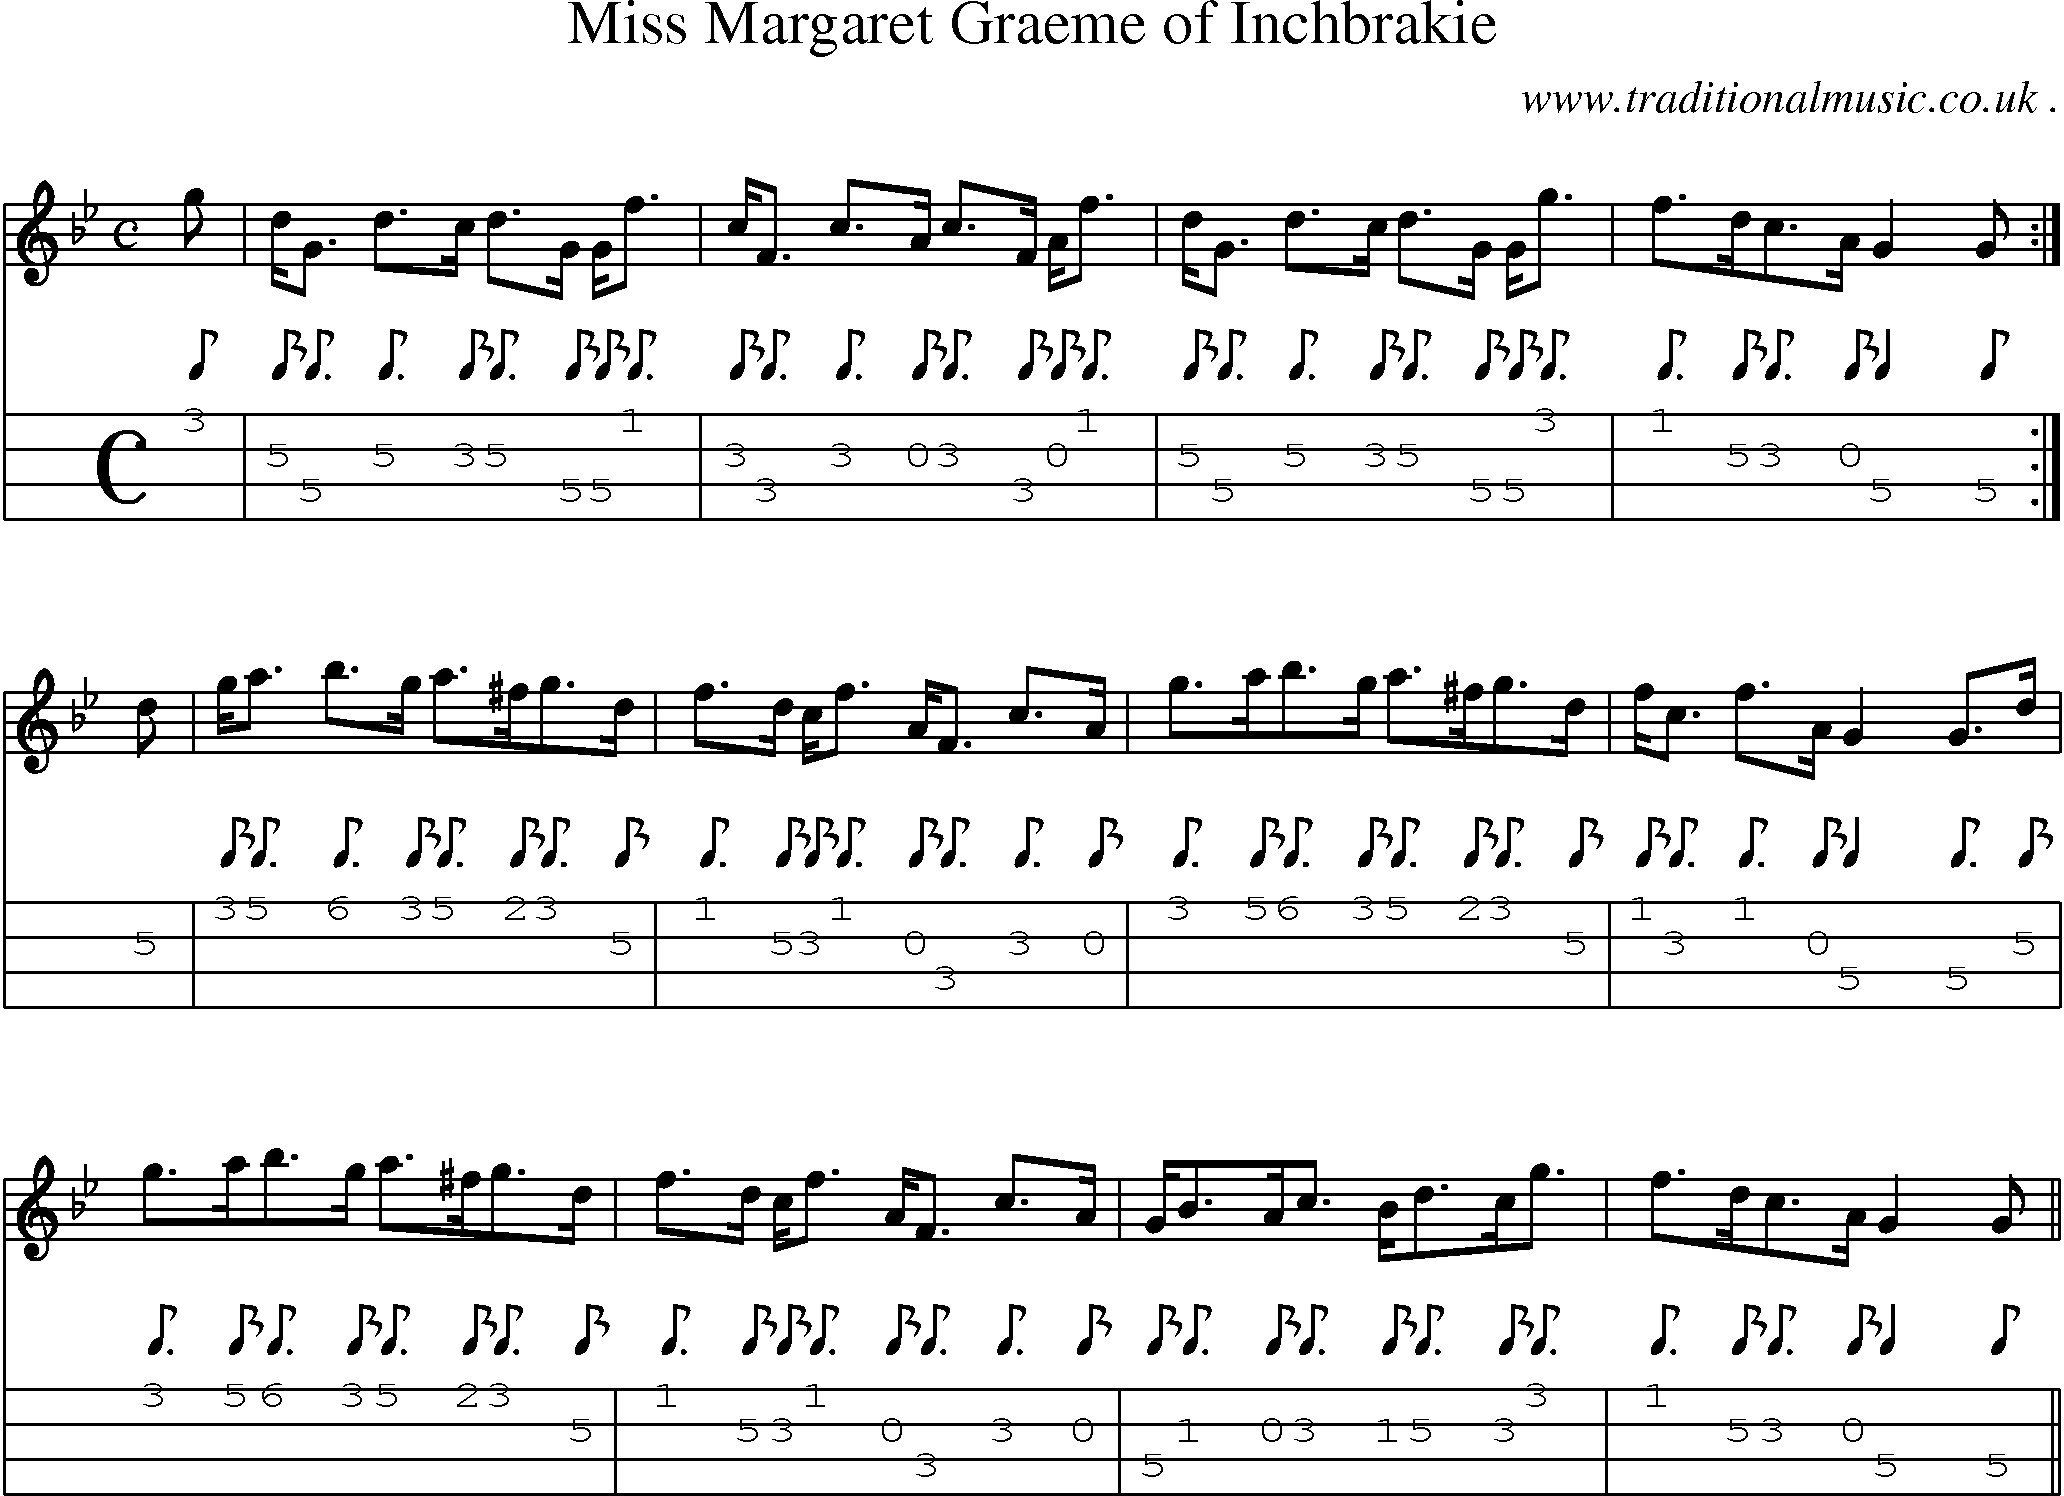 Sheet-music  score, Chords and Mandolin Tabs for Miss Margaret Graeme Of Inchbrakie